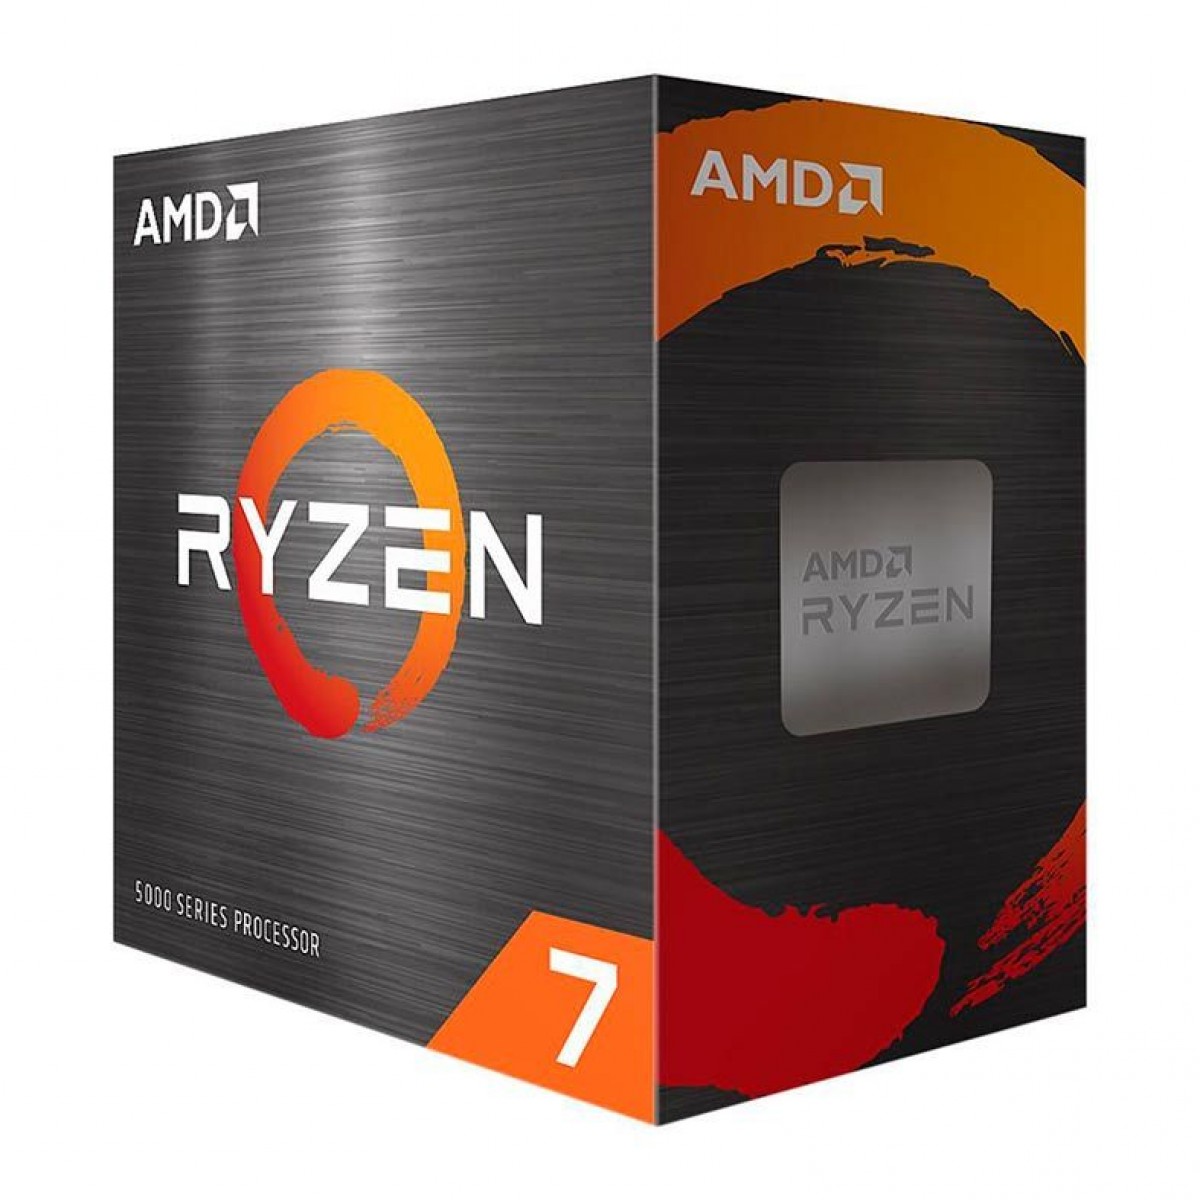 Kit Upgrade, Asus Prime B450M Gaming/BR + AMD Ryzen 7 5700G + Memória DDR4, 8GB/3000MHz